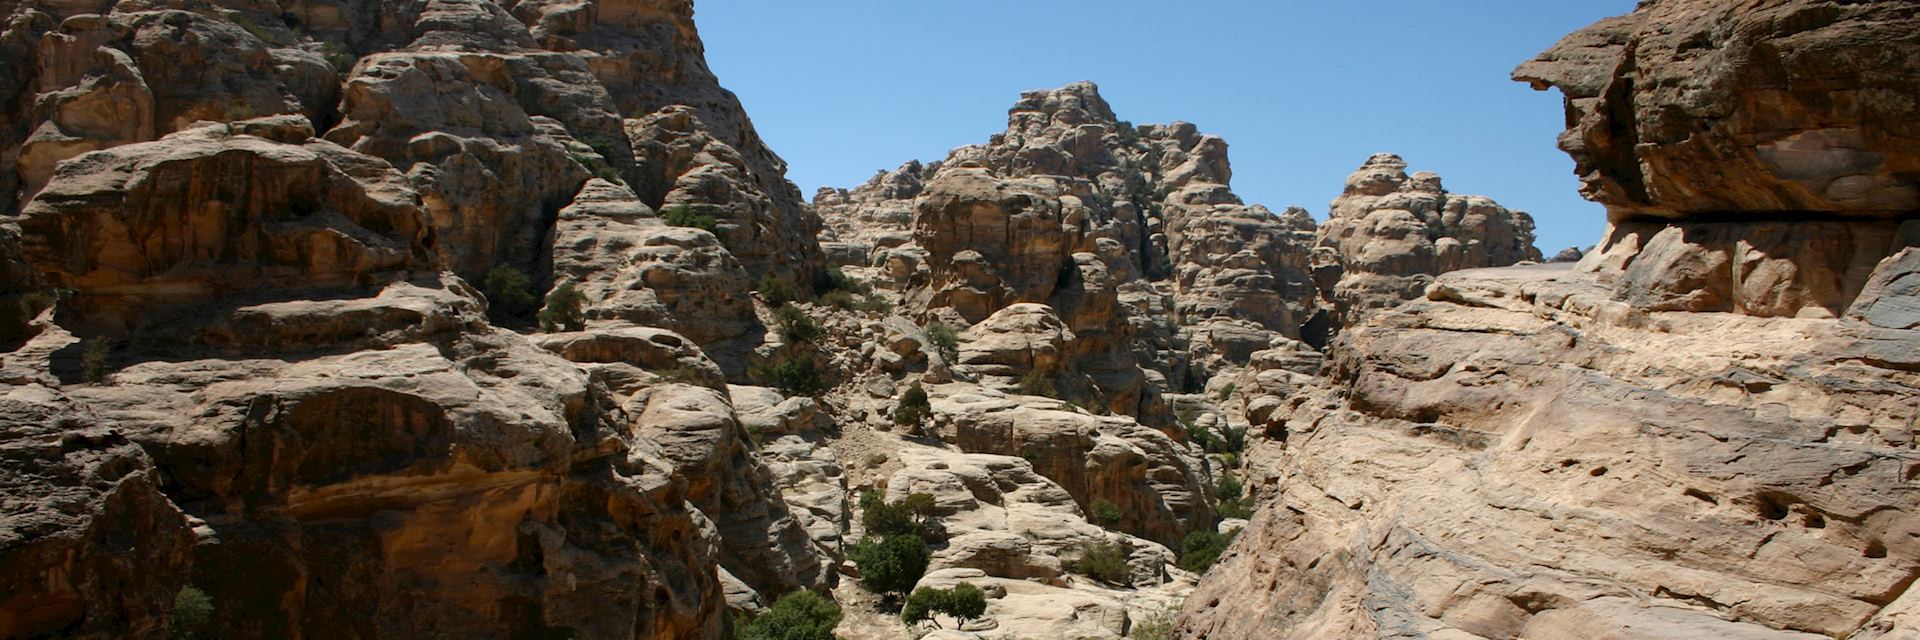 Valley near Little Petra, Jordan